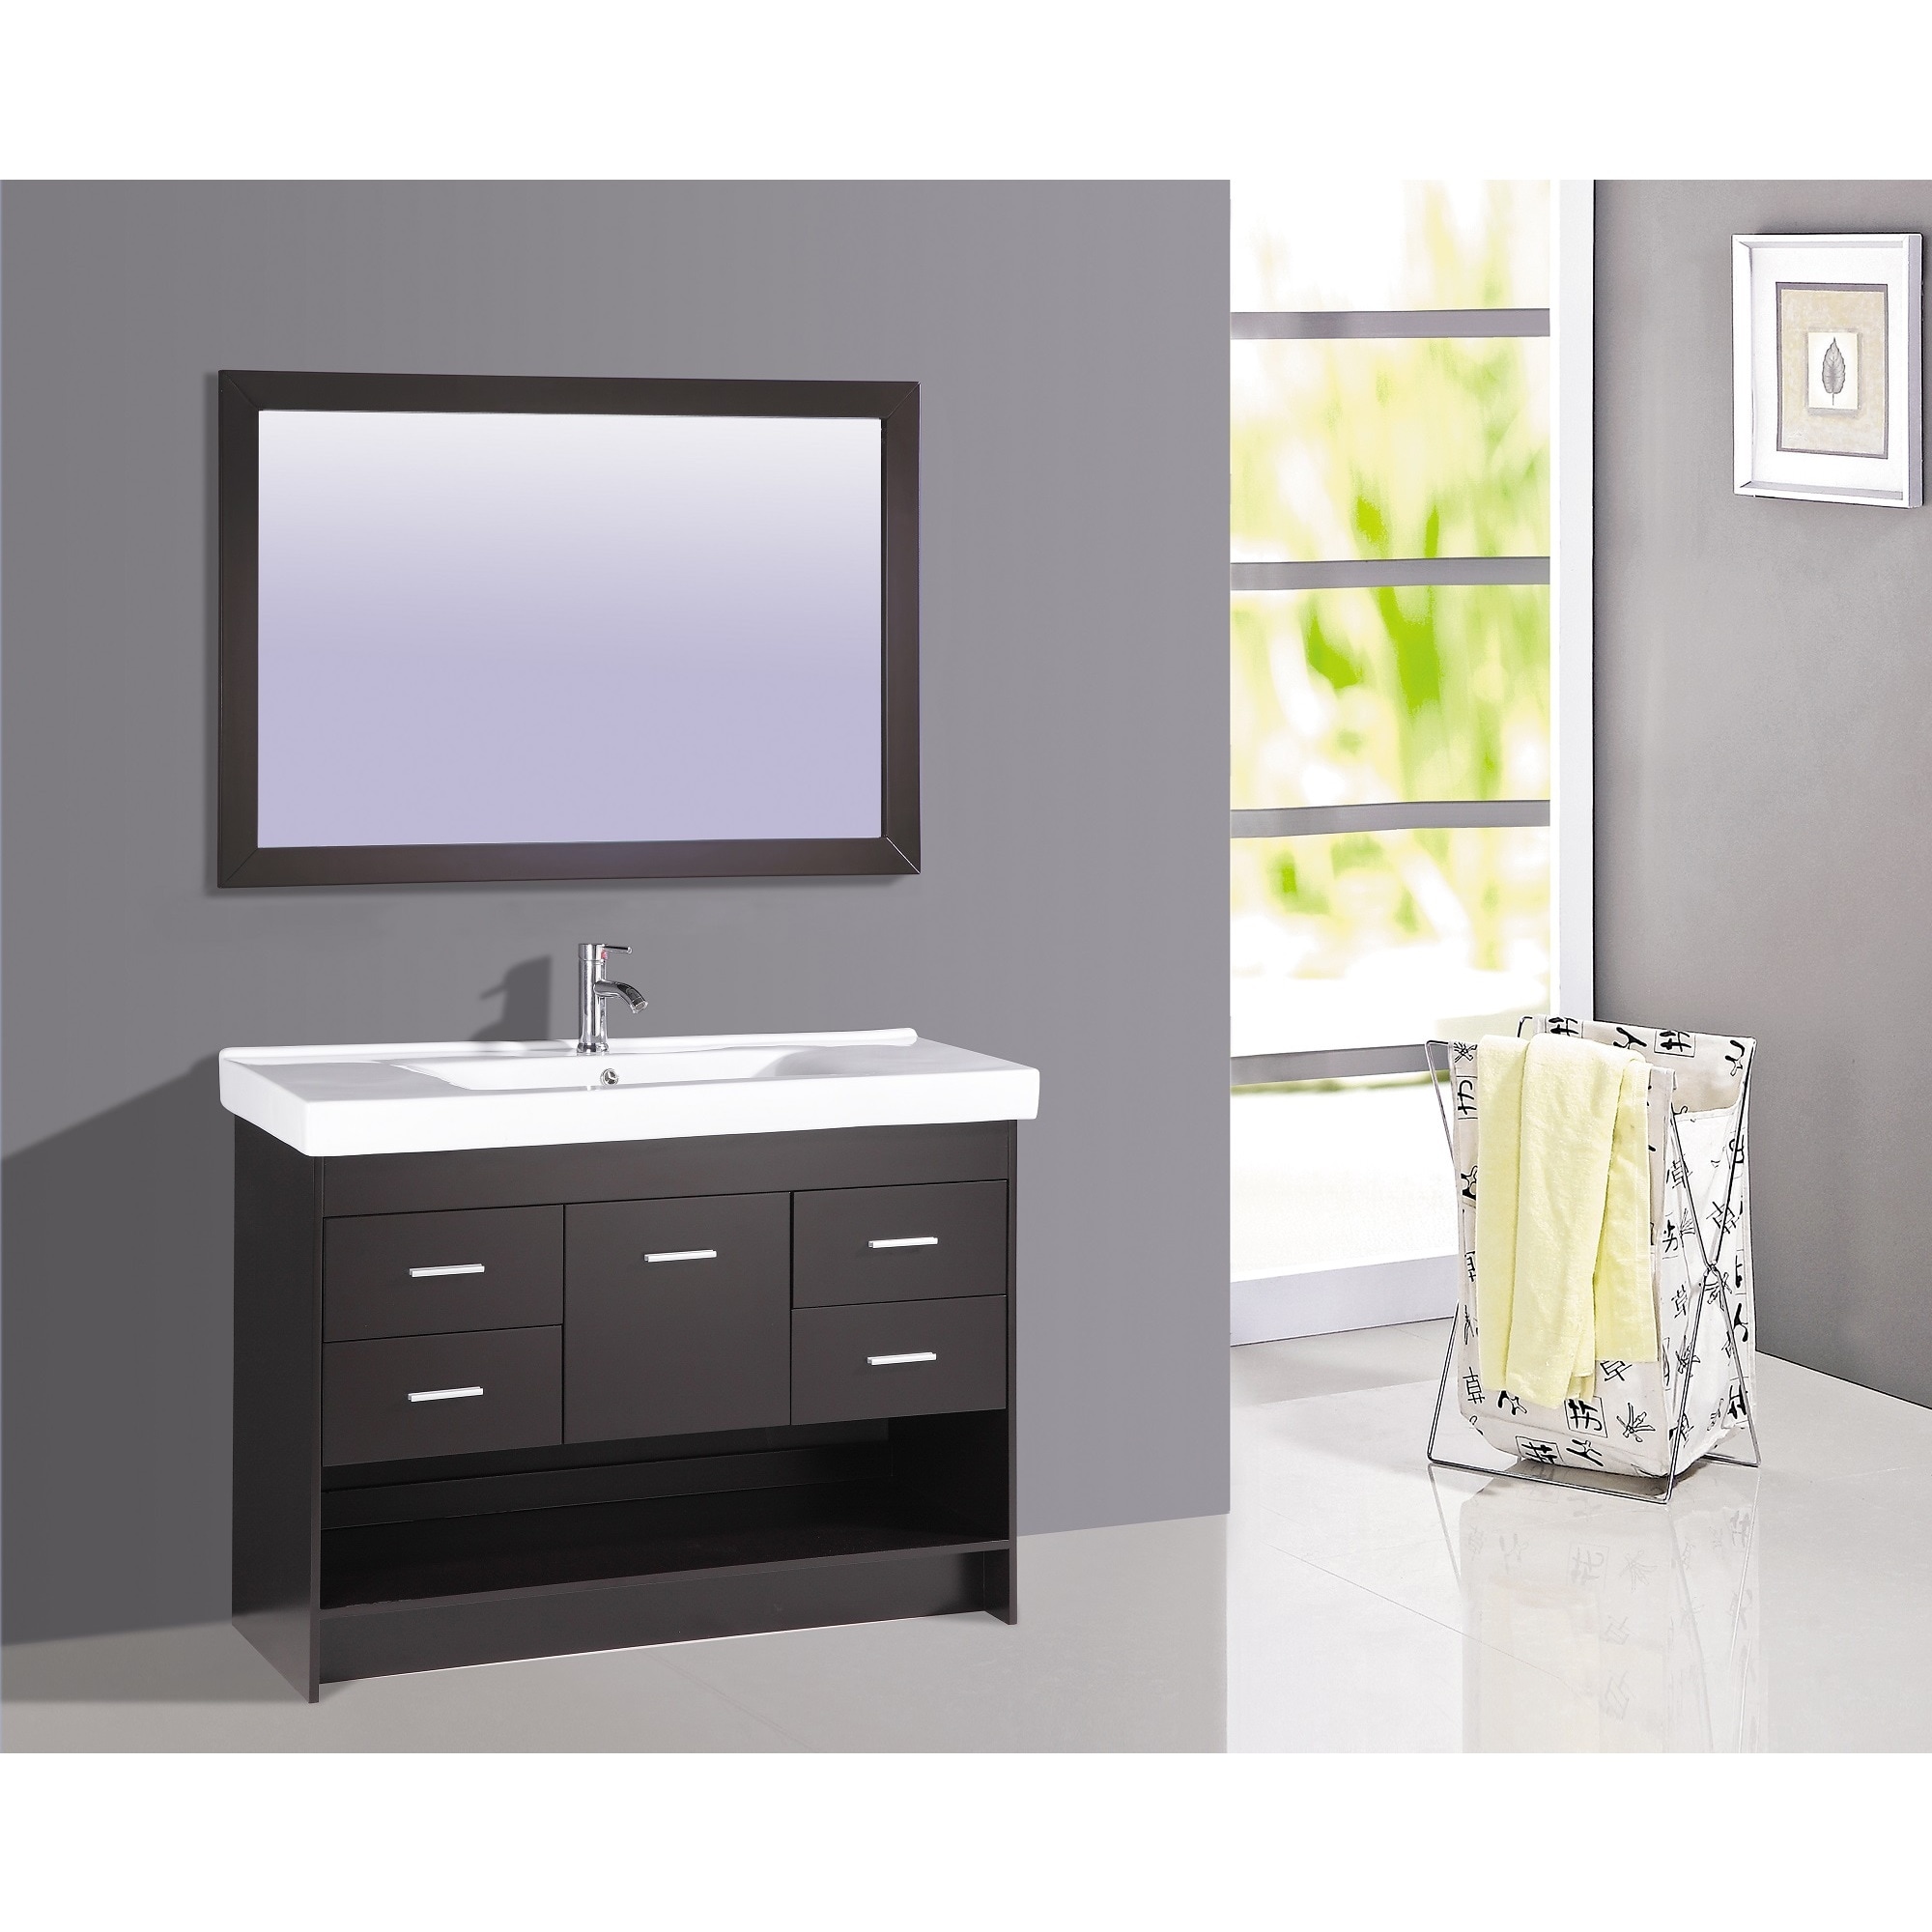 Legion Furniture 48 Inch Bathroom Sink Vanity With Matching Mirror Overstock 12353041